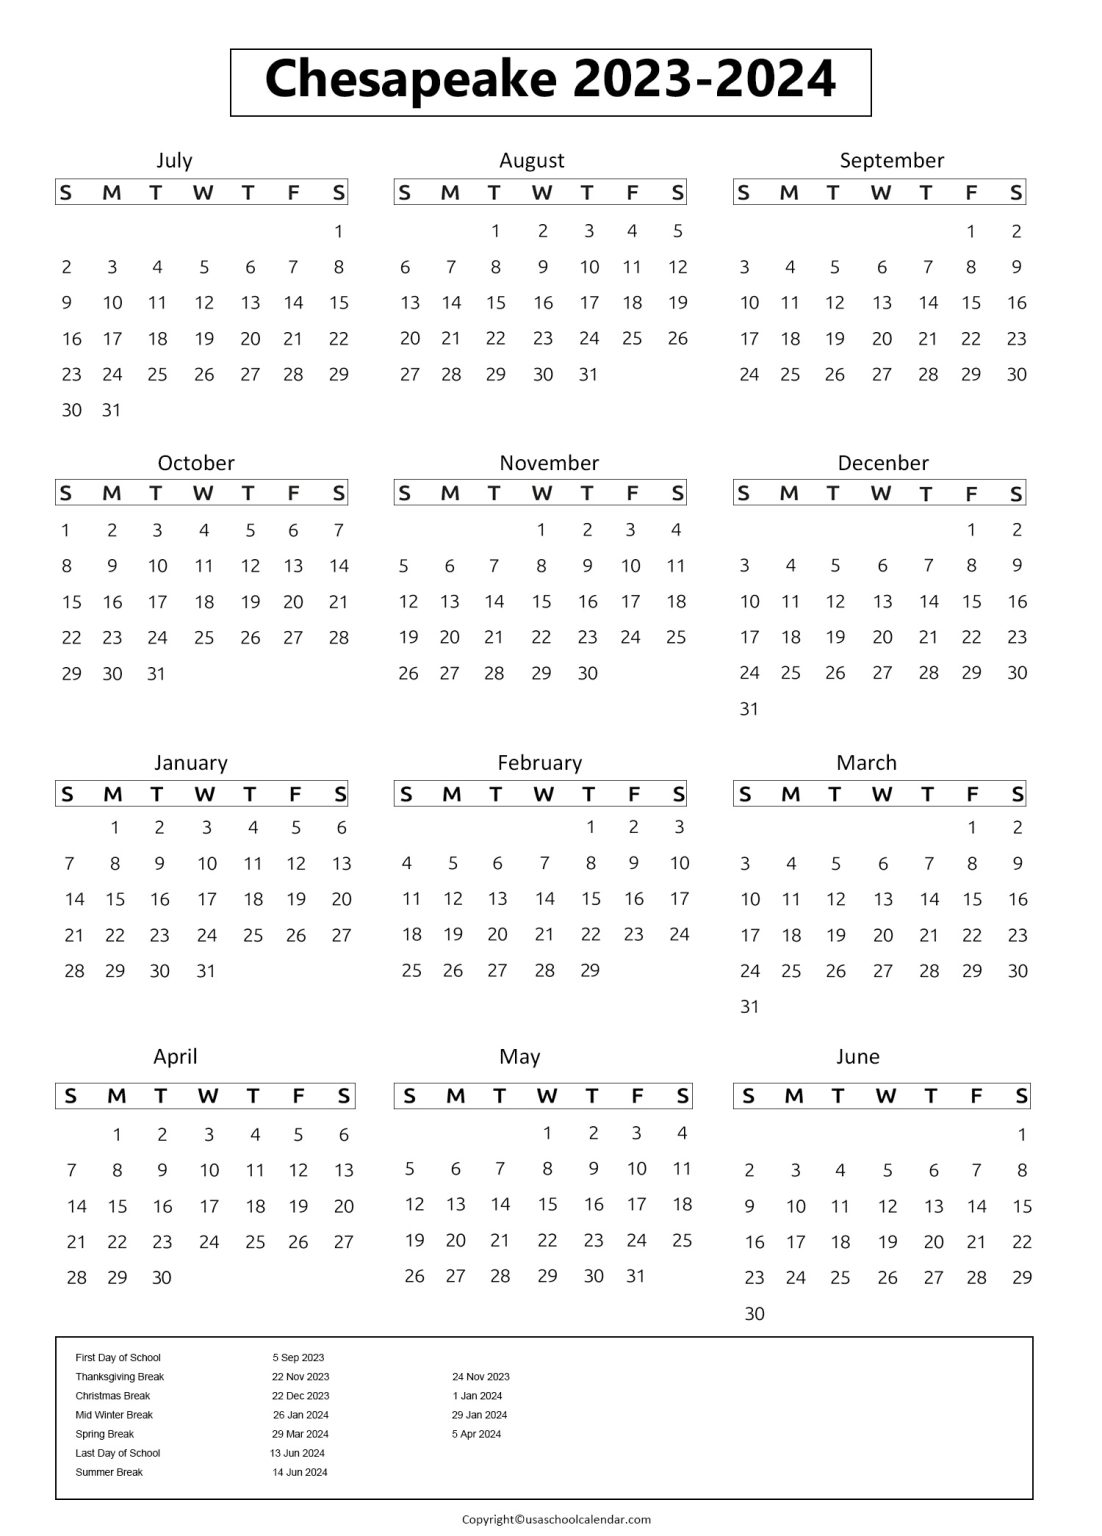 chesapeake-public-schools-calendar-holidays-2023-2024